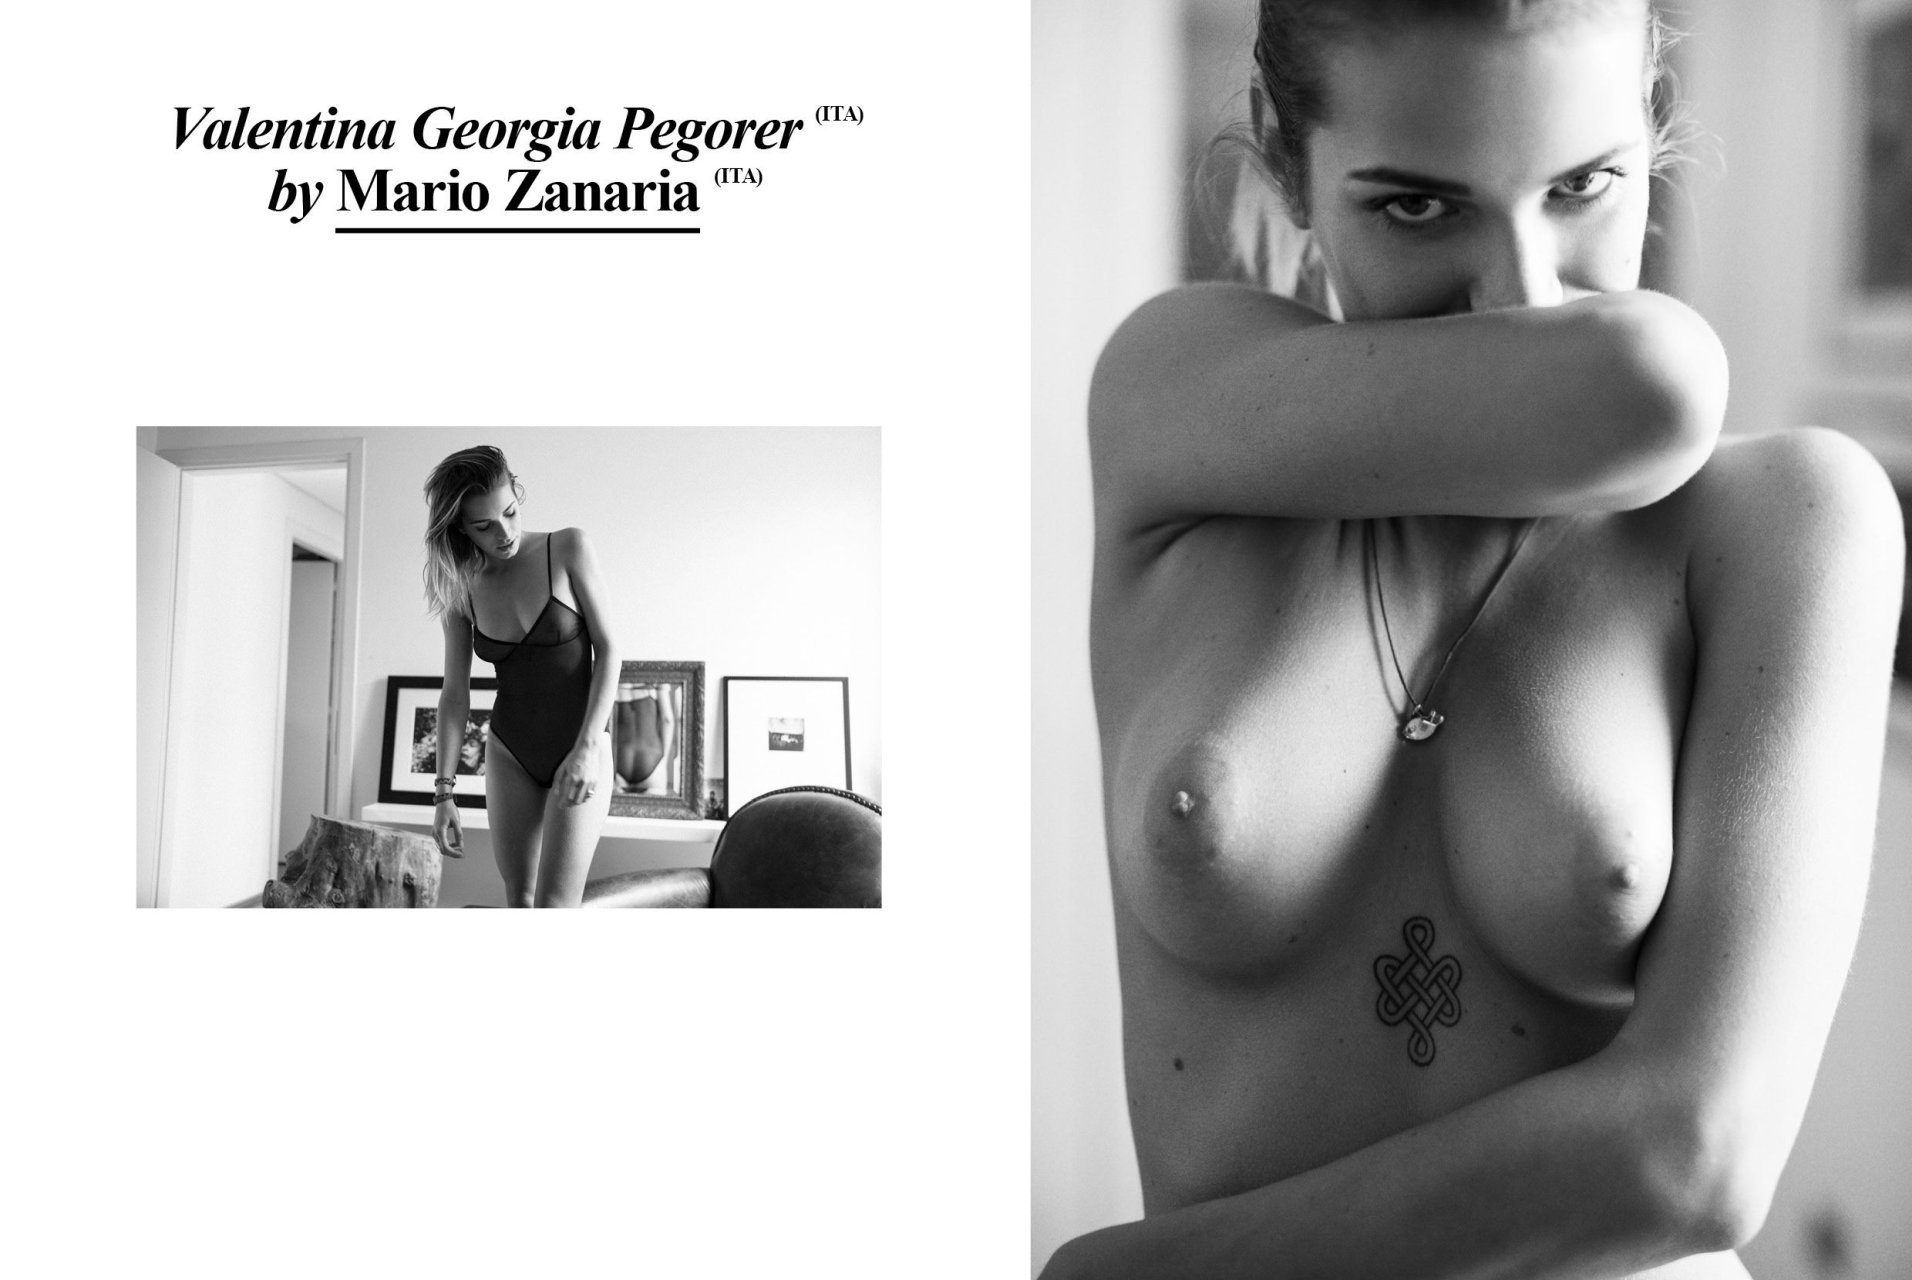 Giorgia whigham naked - 🧡 Джорджия уигхэм голая (61 фото) - скачать карти....